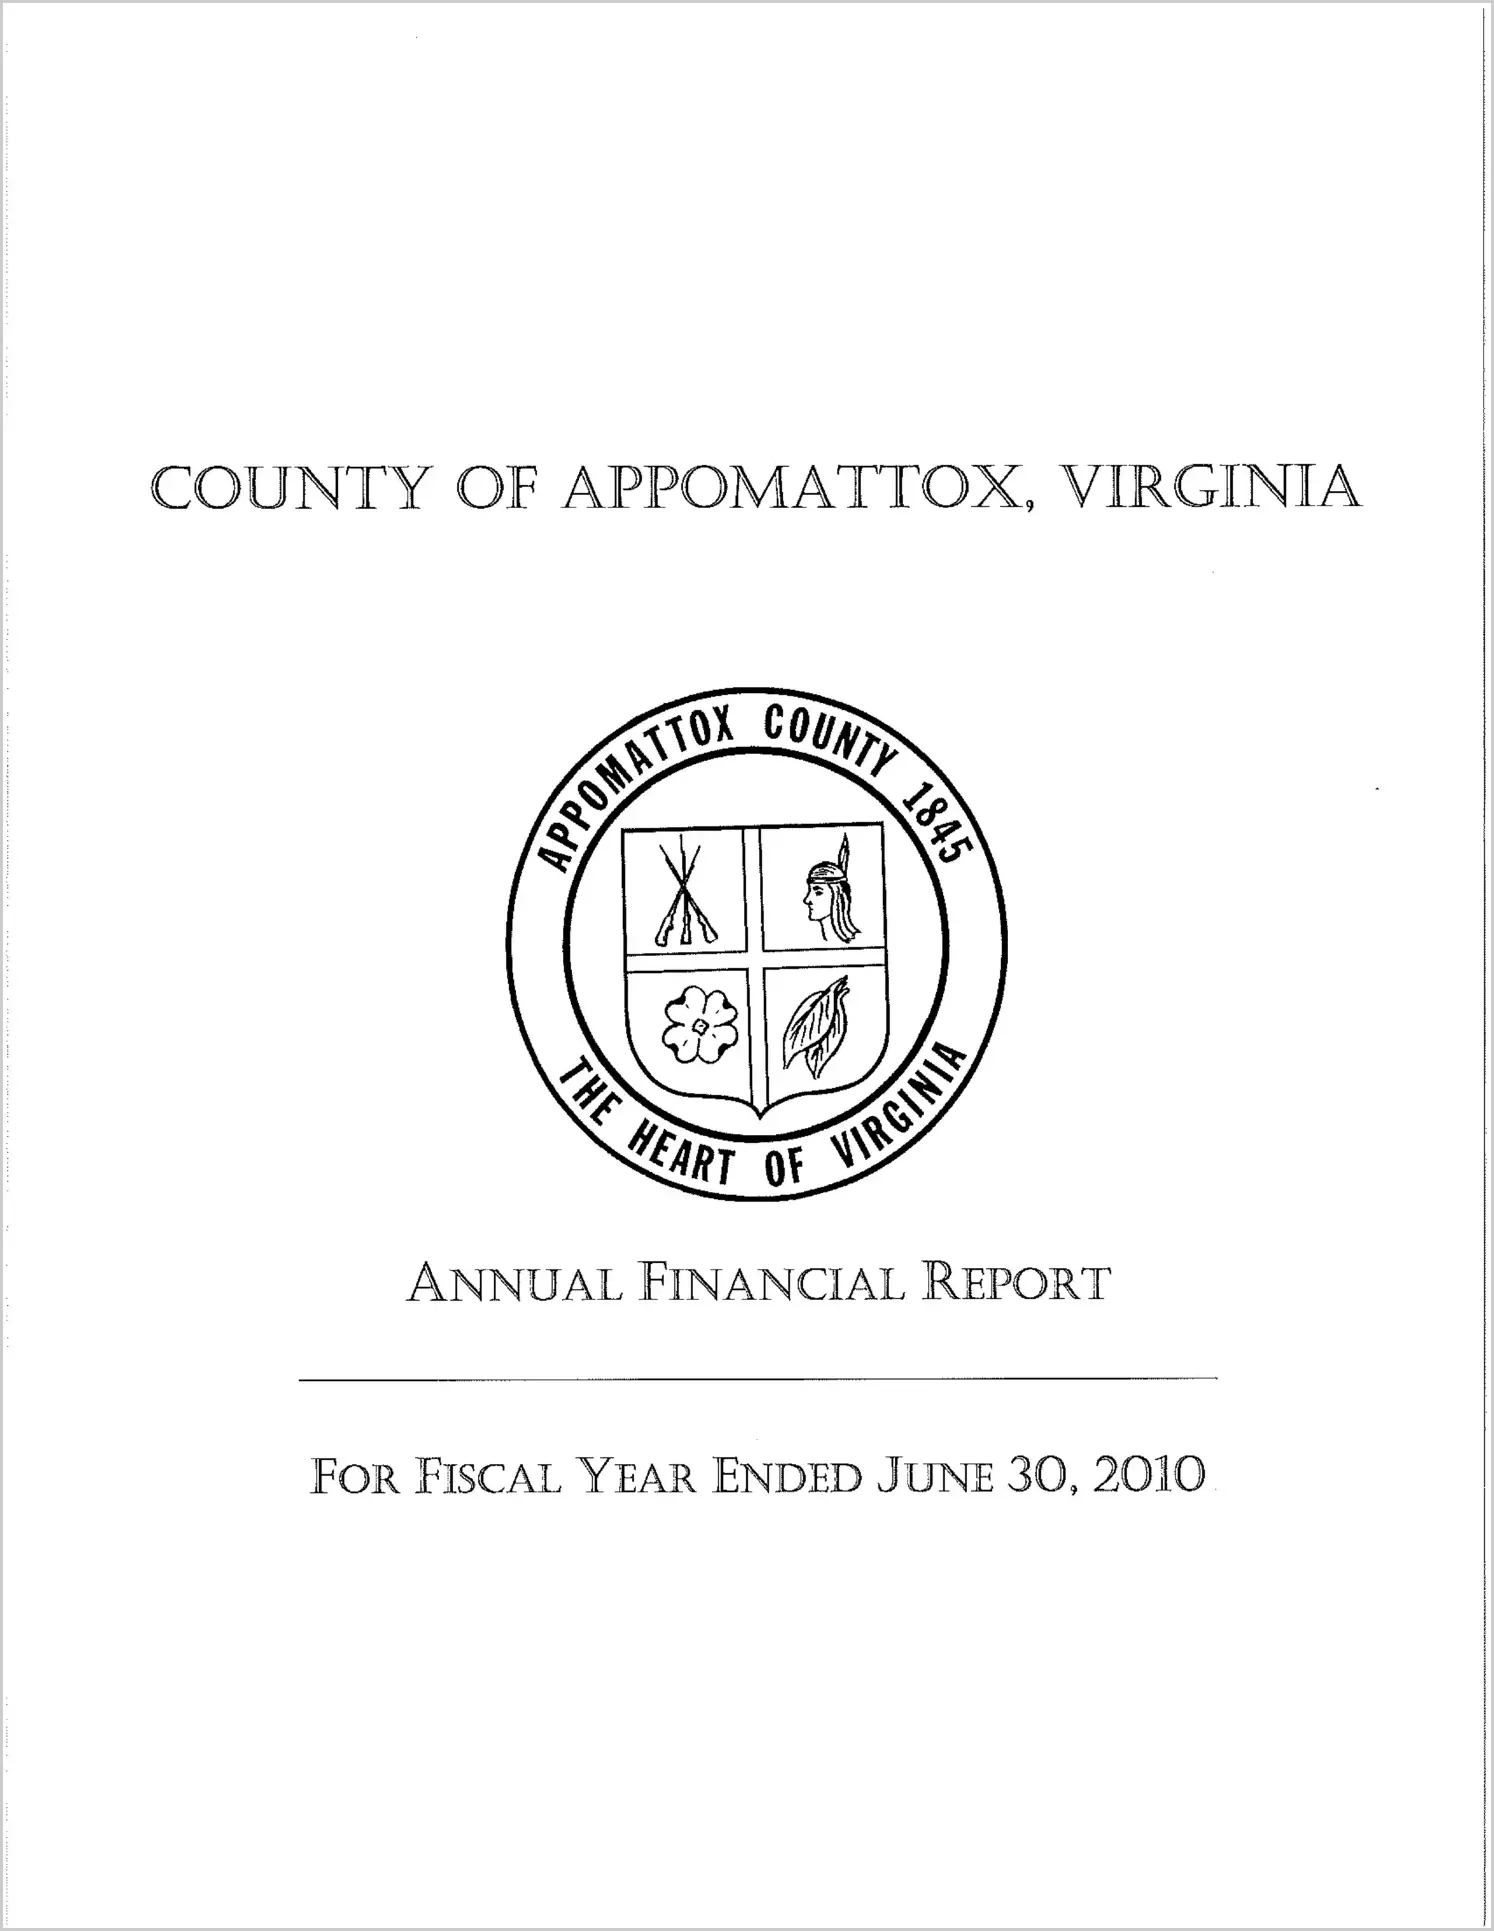 2010 Annual Financial Report for County of Appomattox